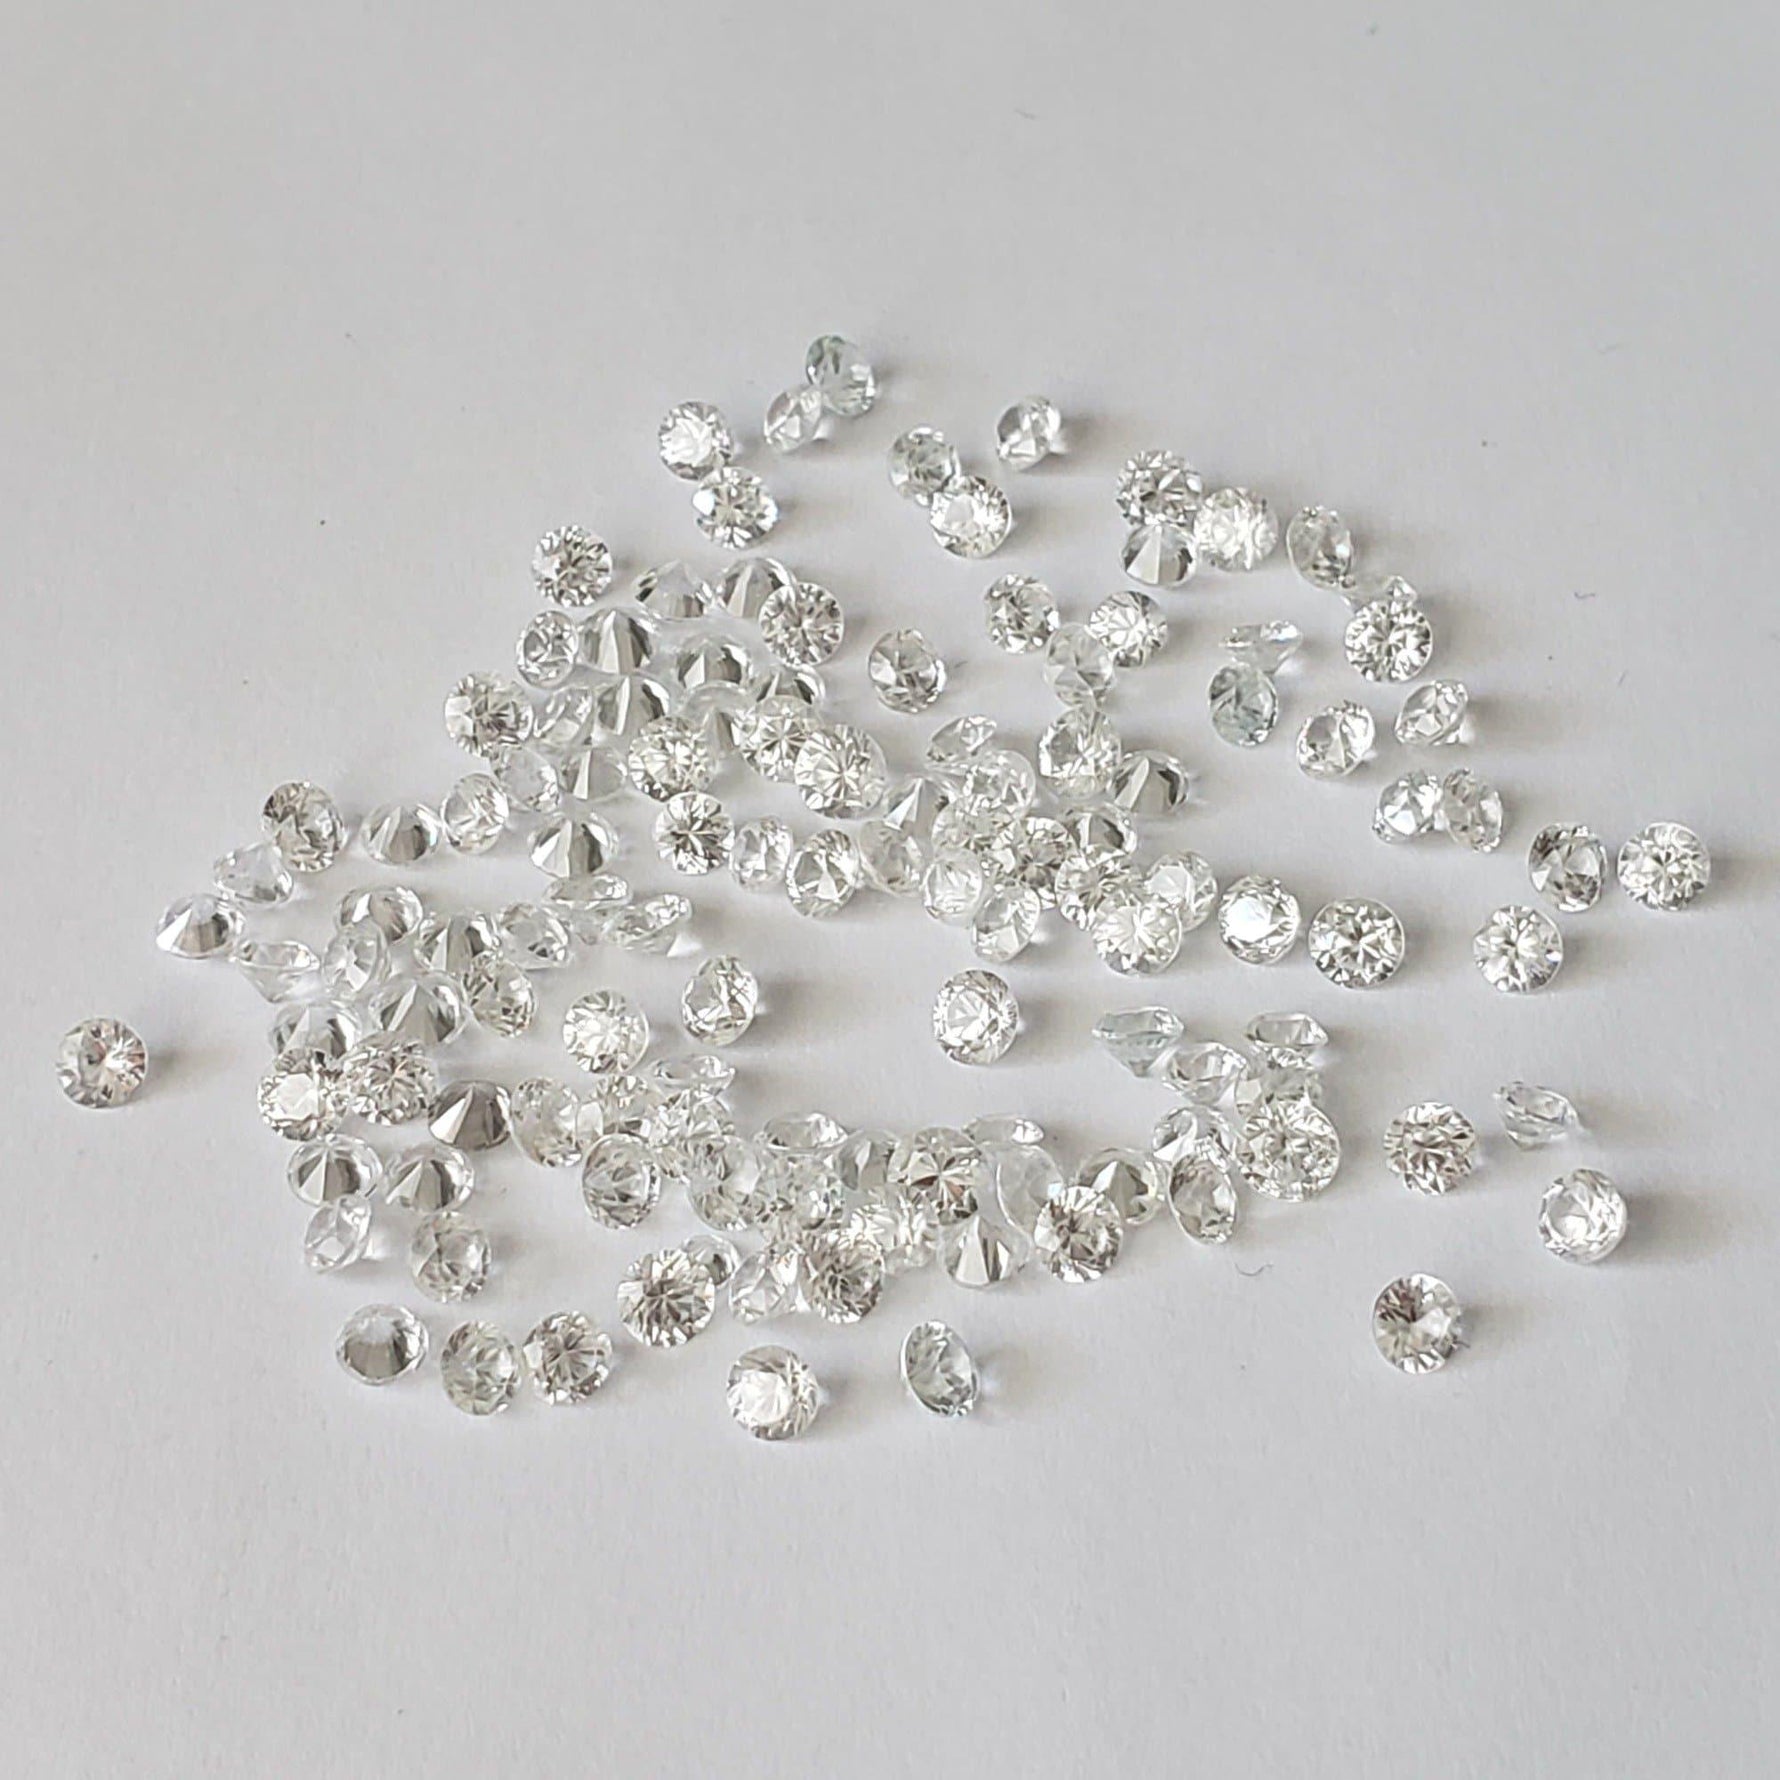 Zircon | Round Diamond Cut | White | 3.5mm | Cambodia | Canagem.com